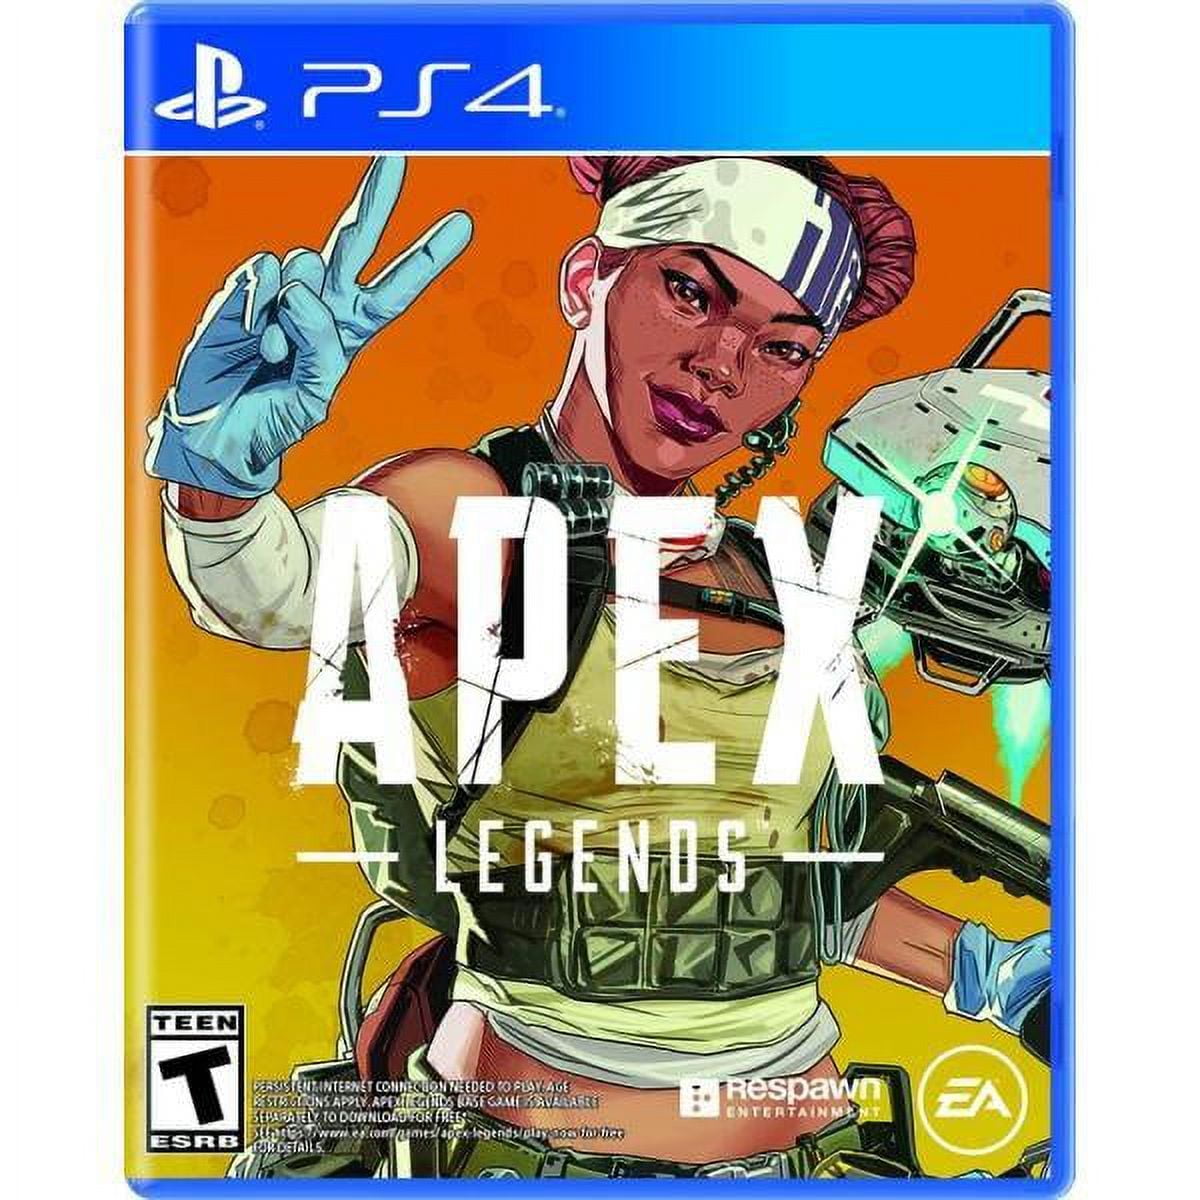 Cheapest Apex Legends - 4350 Apex Coins Xbox WW